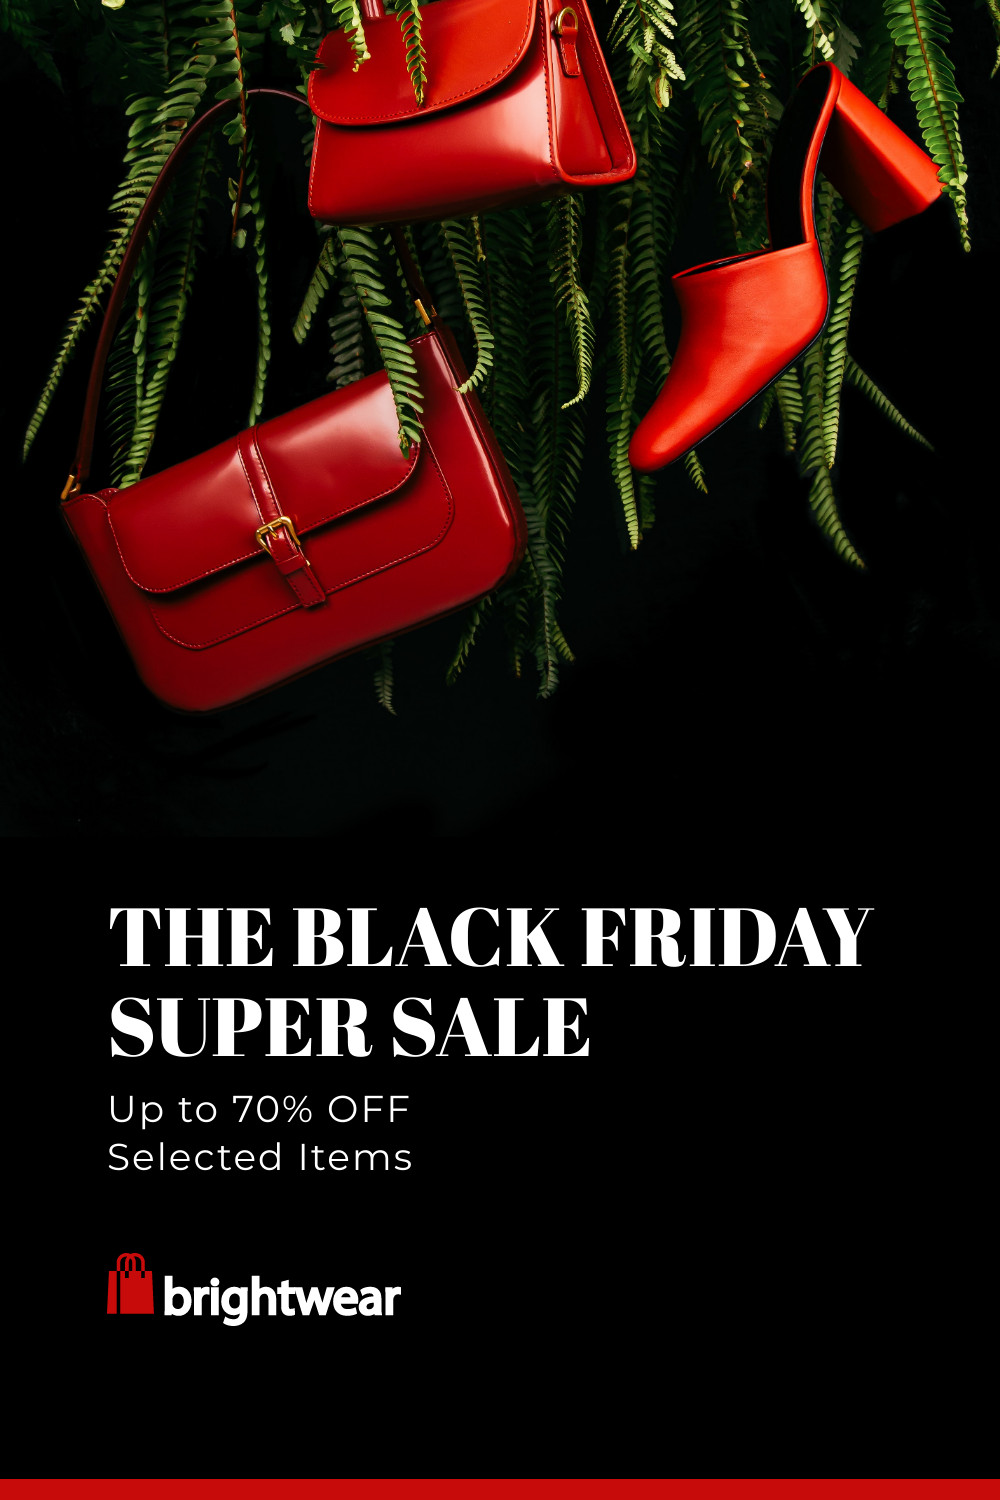 Red Handbag Black Friday Sale Facebook Cover 820x360